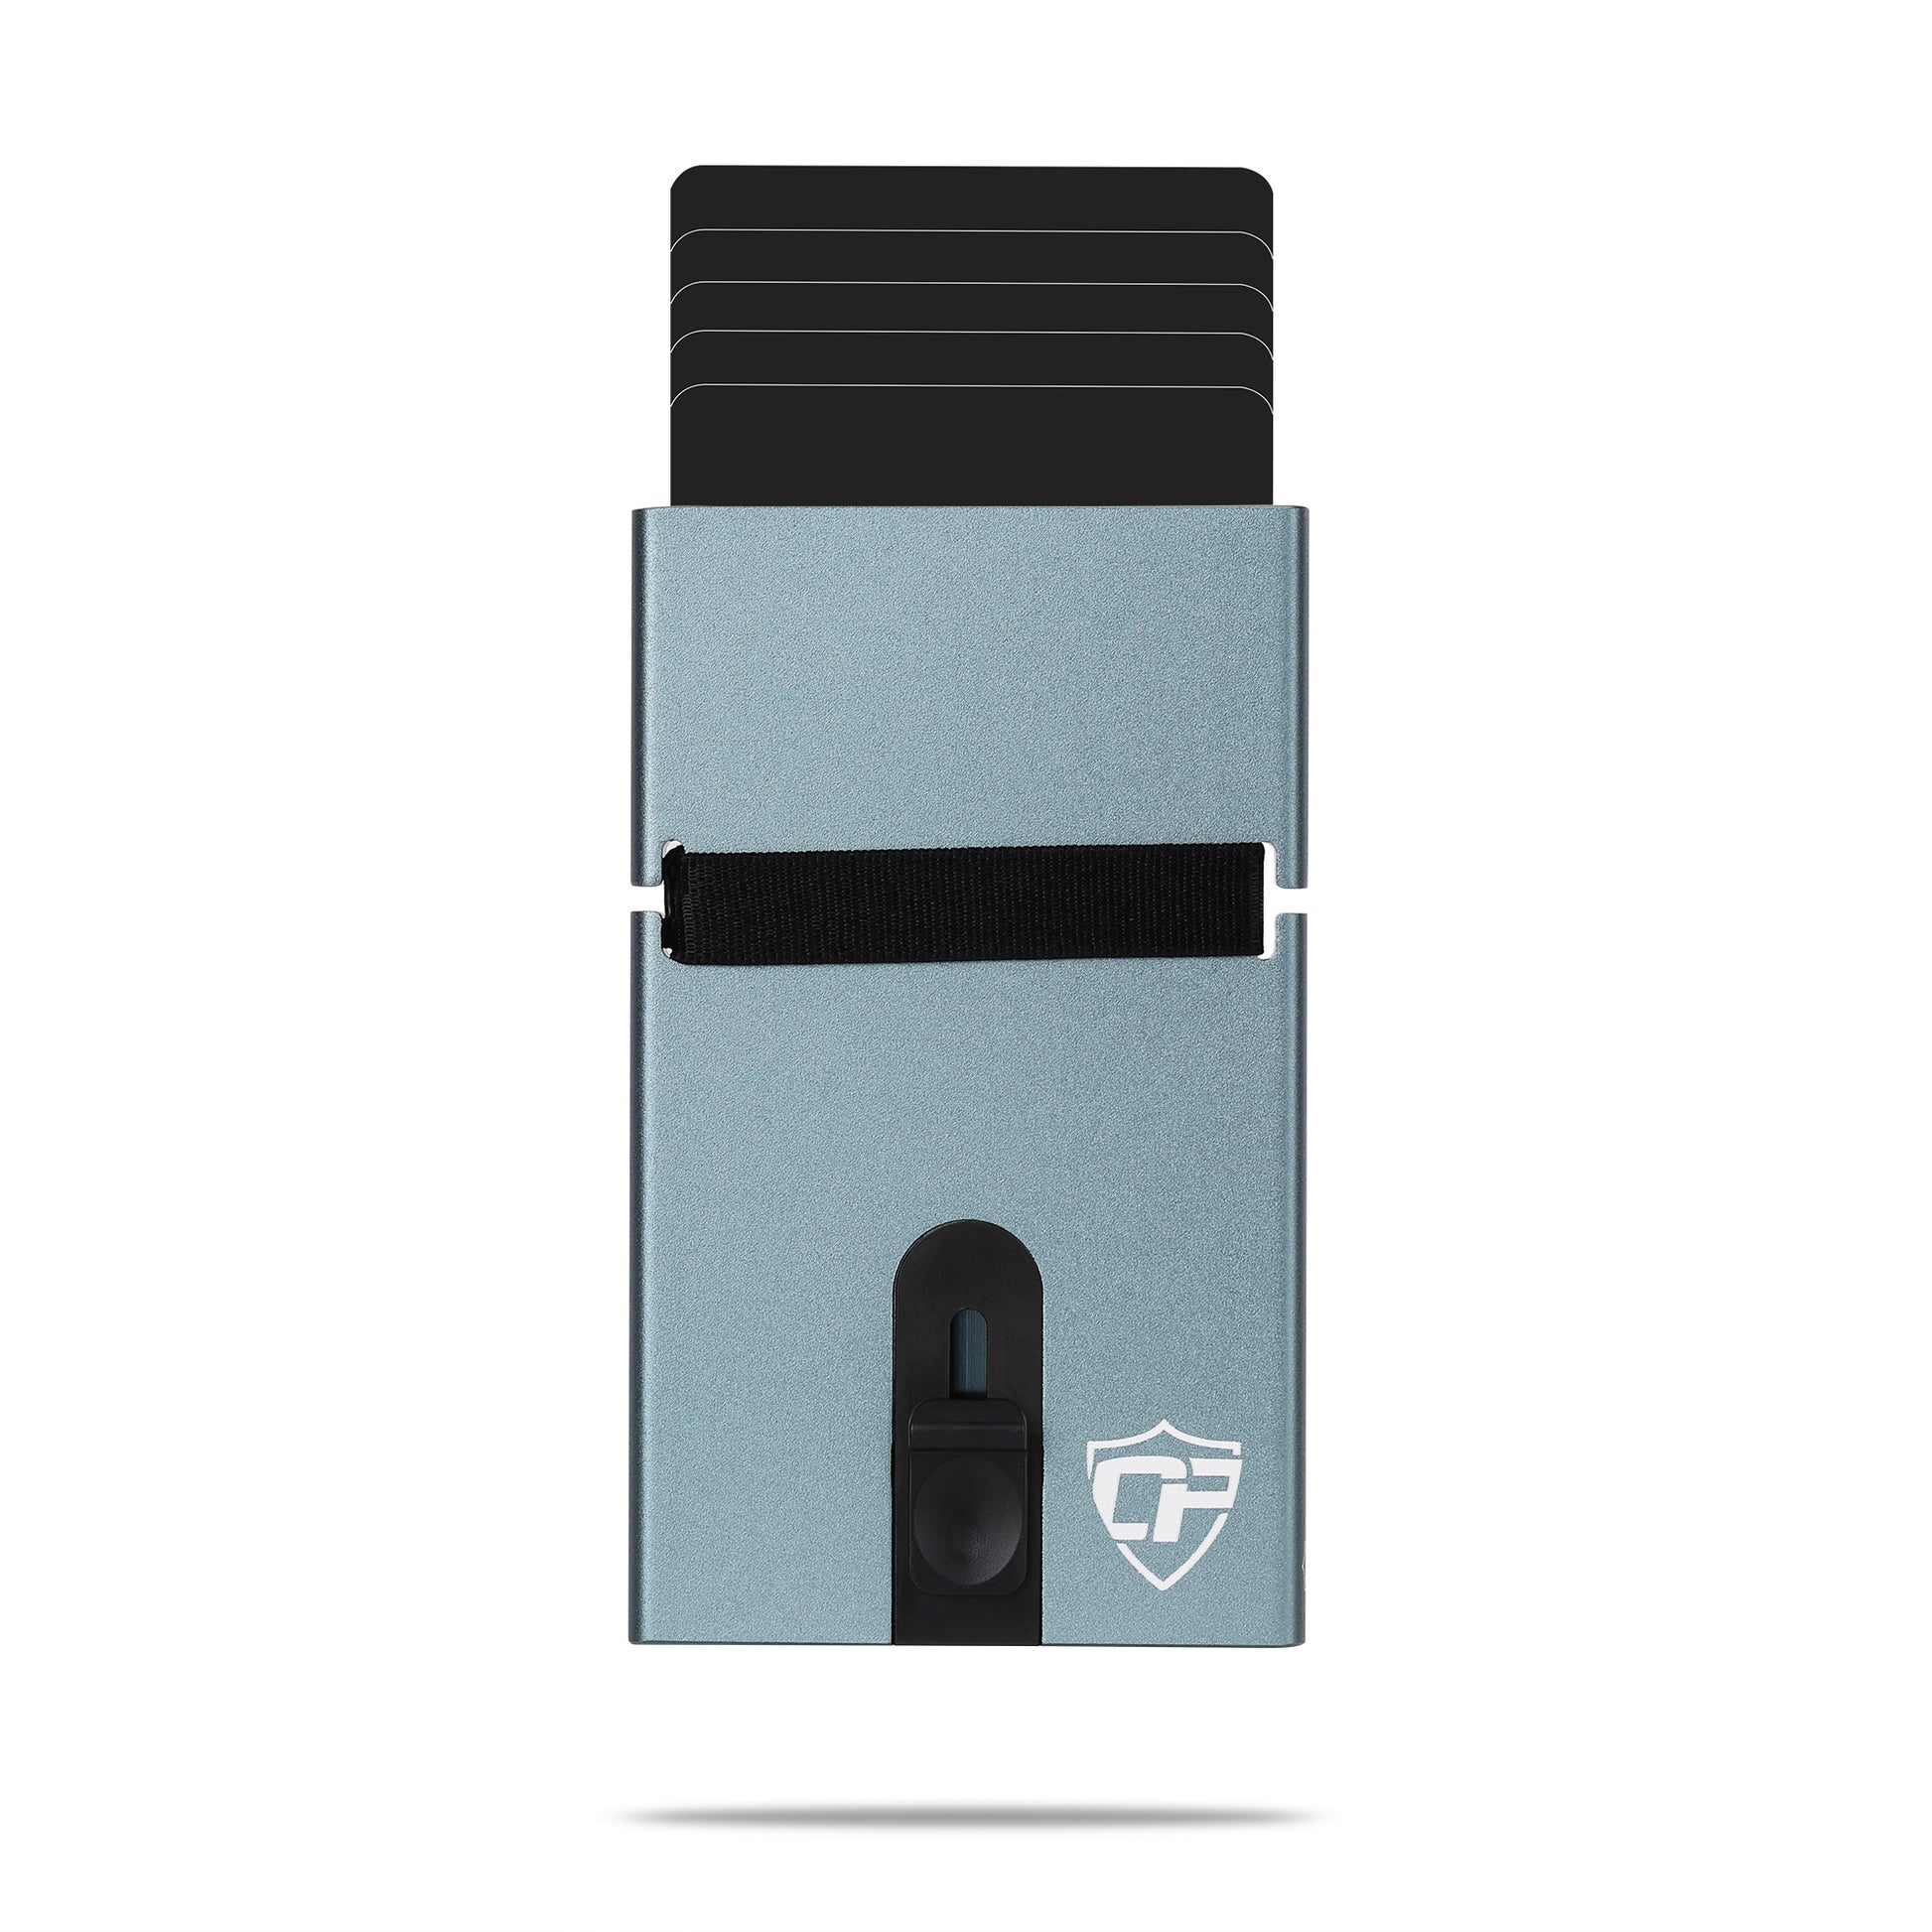 Conceal Plus Card Blocr Slide Wallet RFID Blocking Credit Card Holder (Titanium Metal)